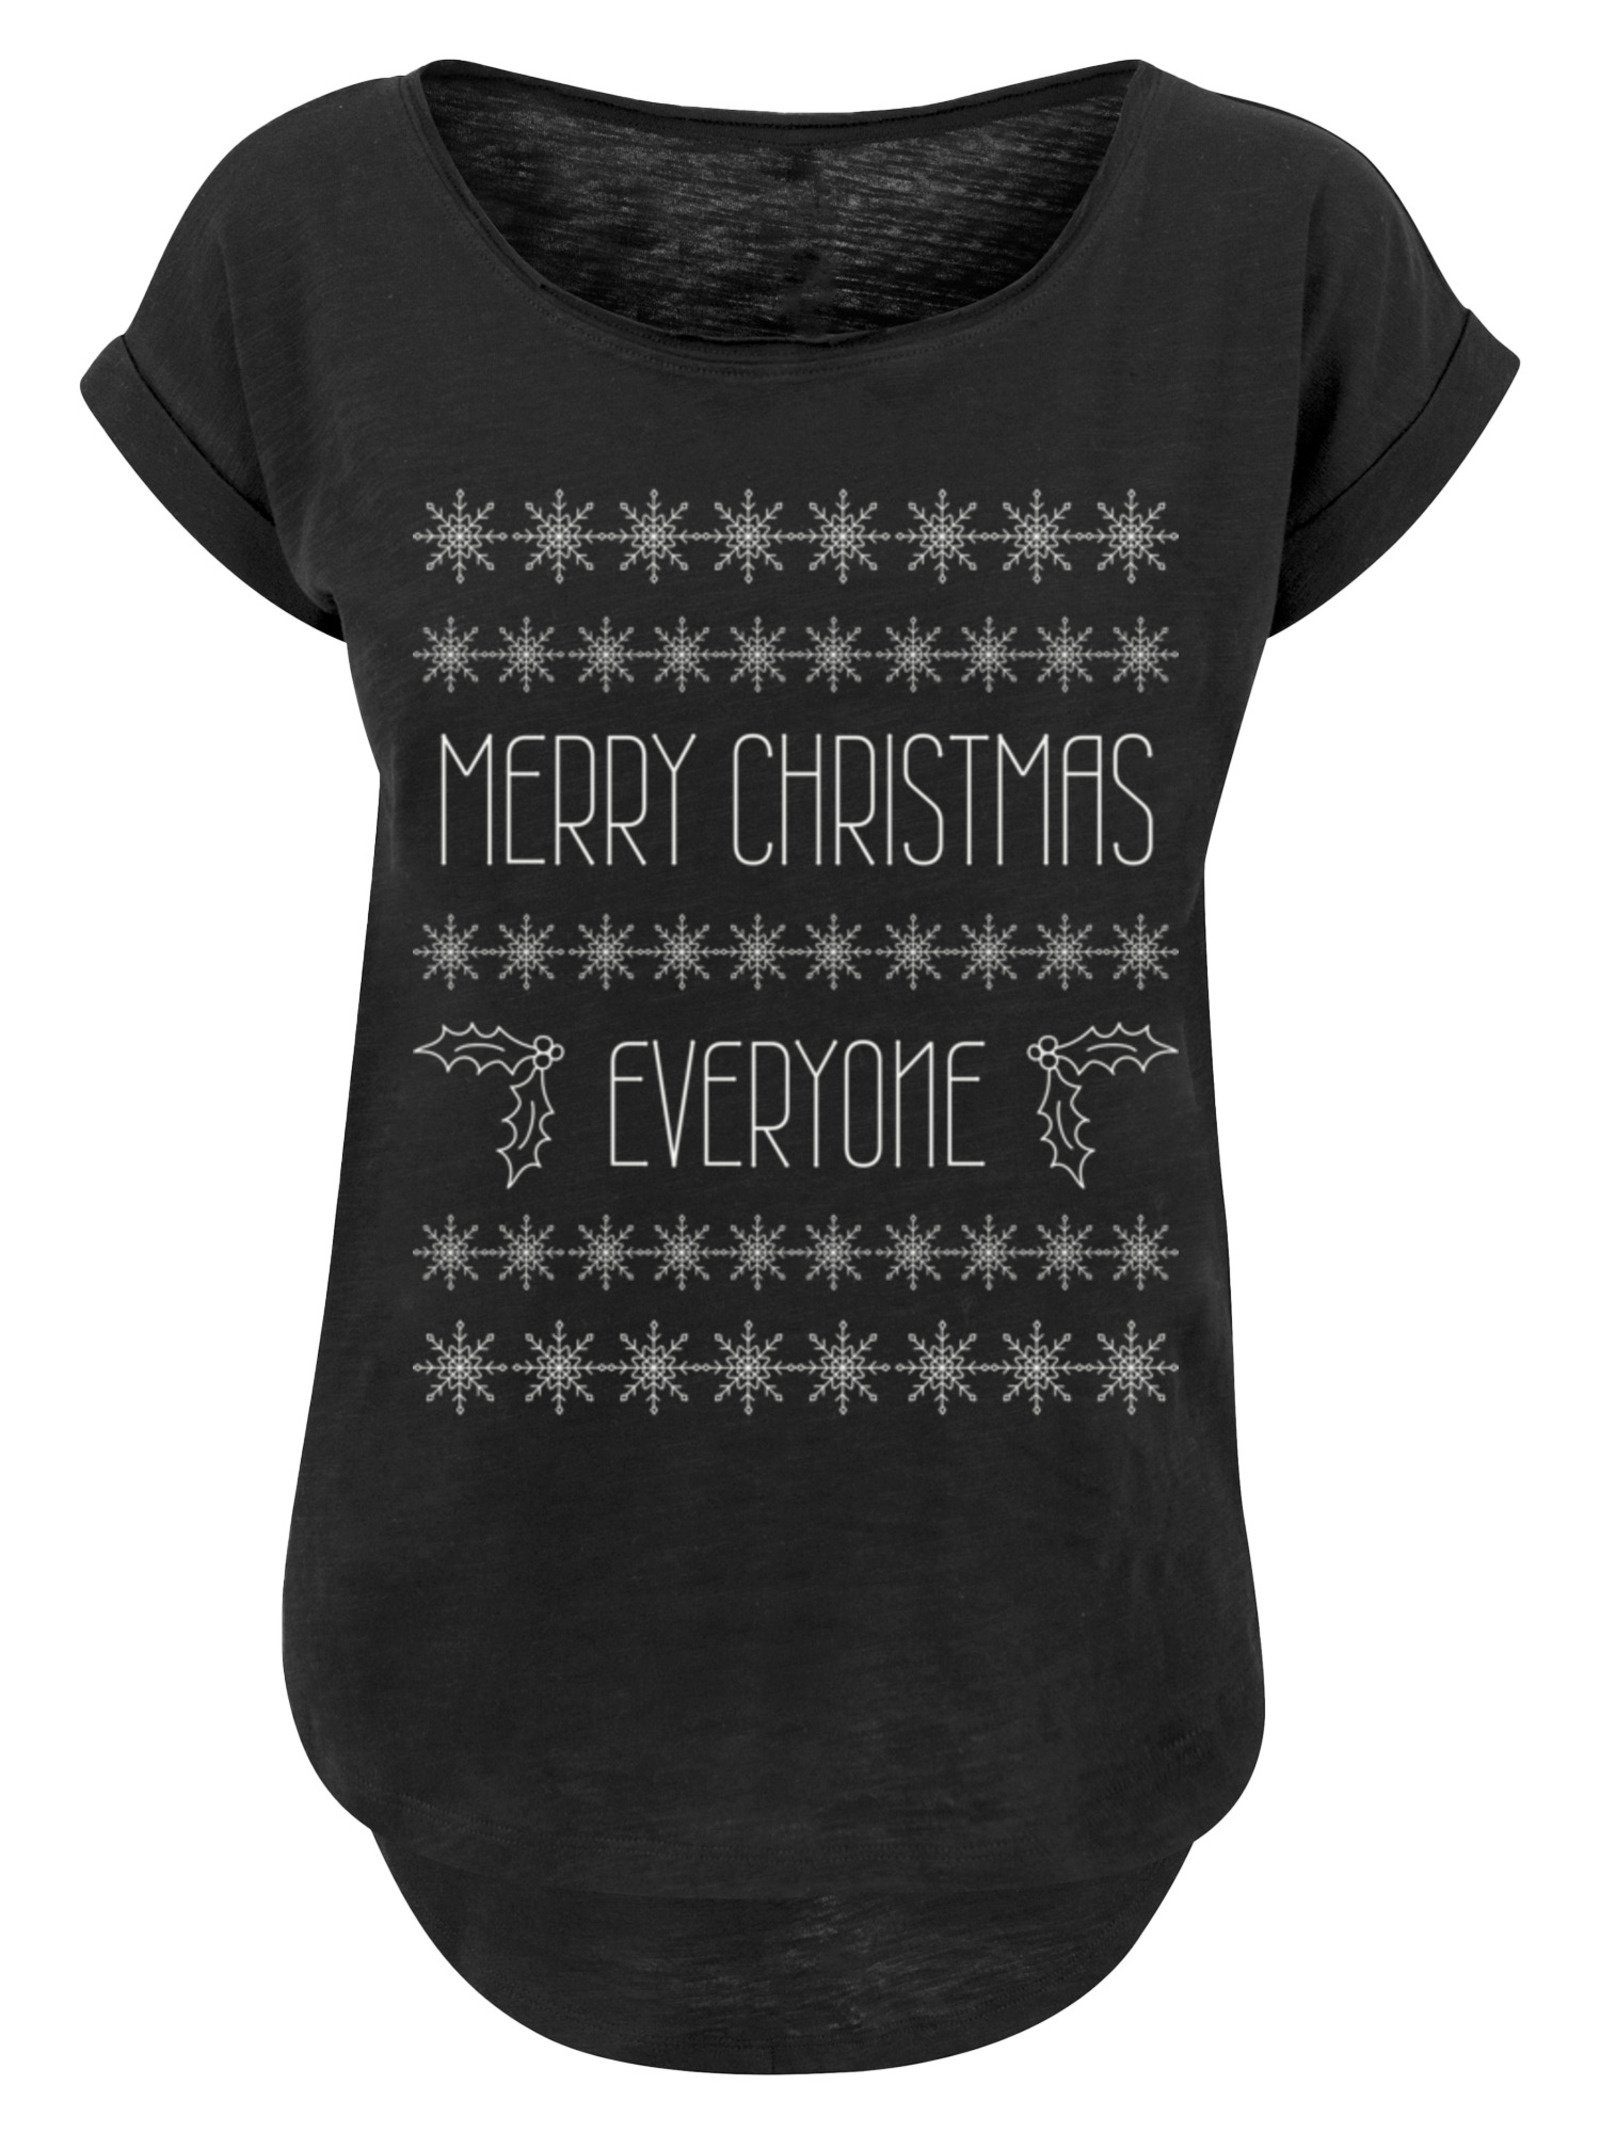 F4NT4STIC T-Shirt Merry schwarz Print Christmas Weihnachten Everyone